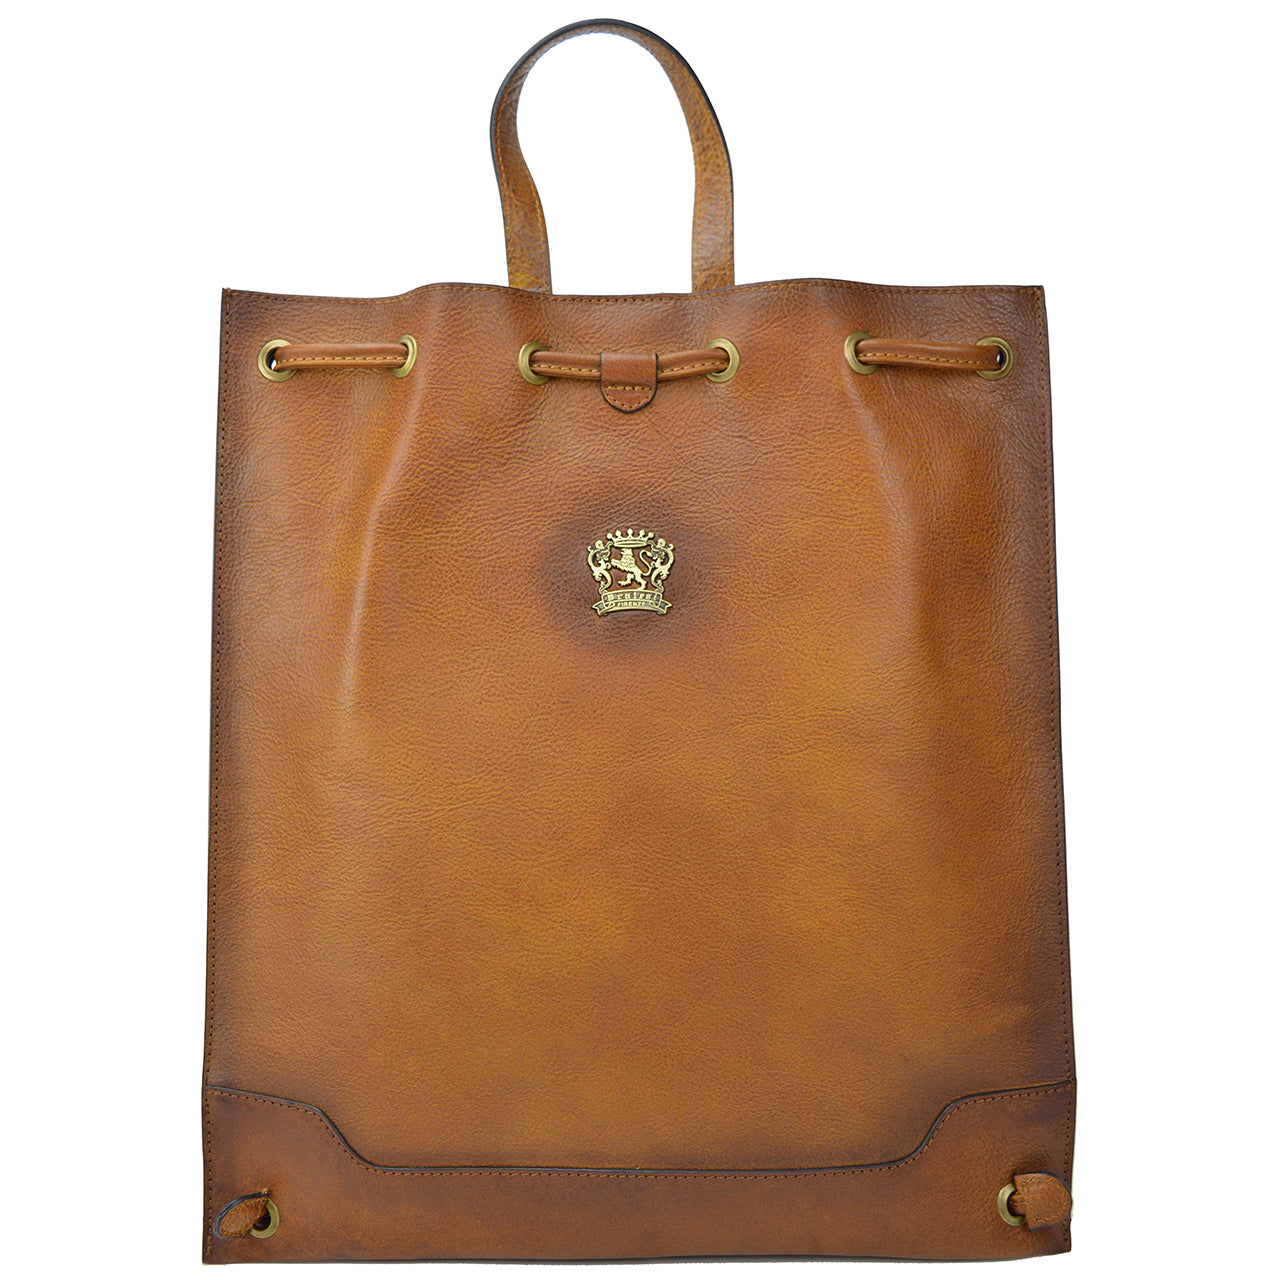 Pratesi Contea B490 Backpack in genuine Italian leather - Contea B490 Cherry